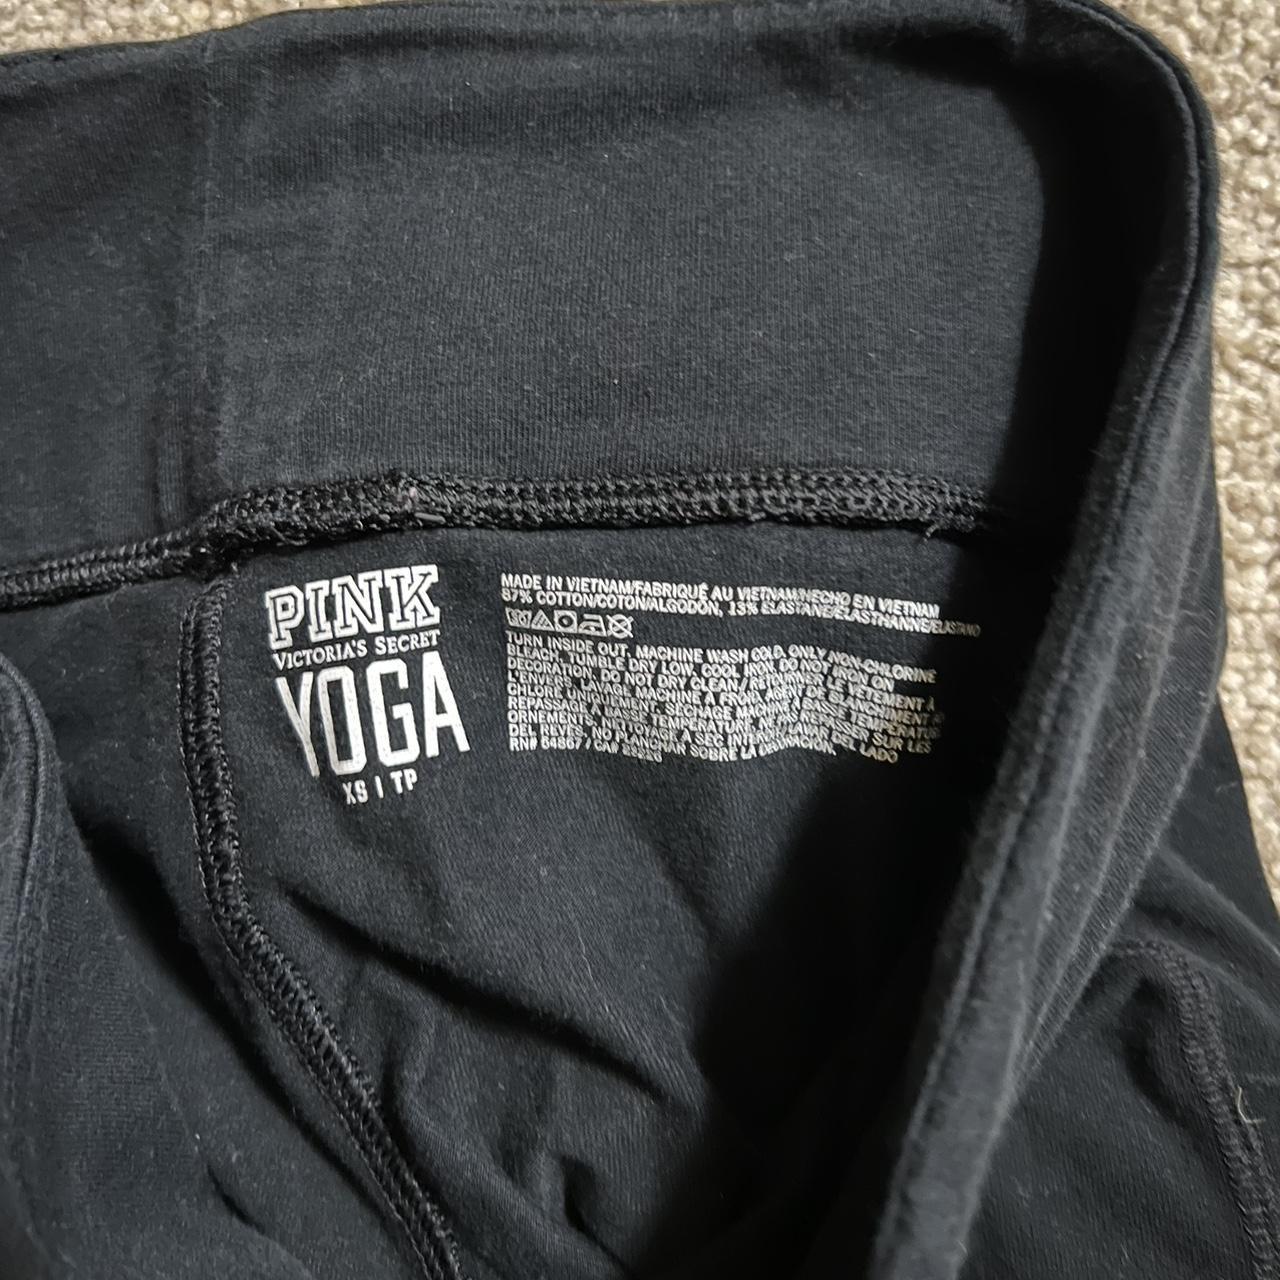 Watch out for fake Victorias Secret Yoga pants : r/Depop